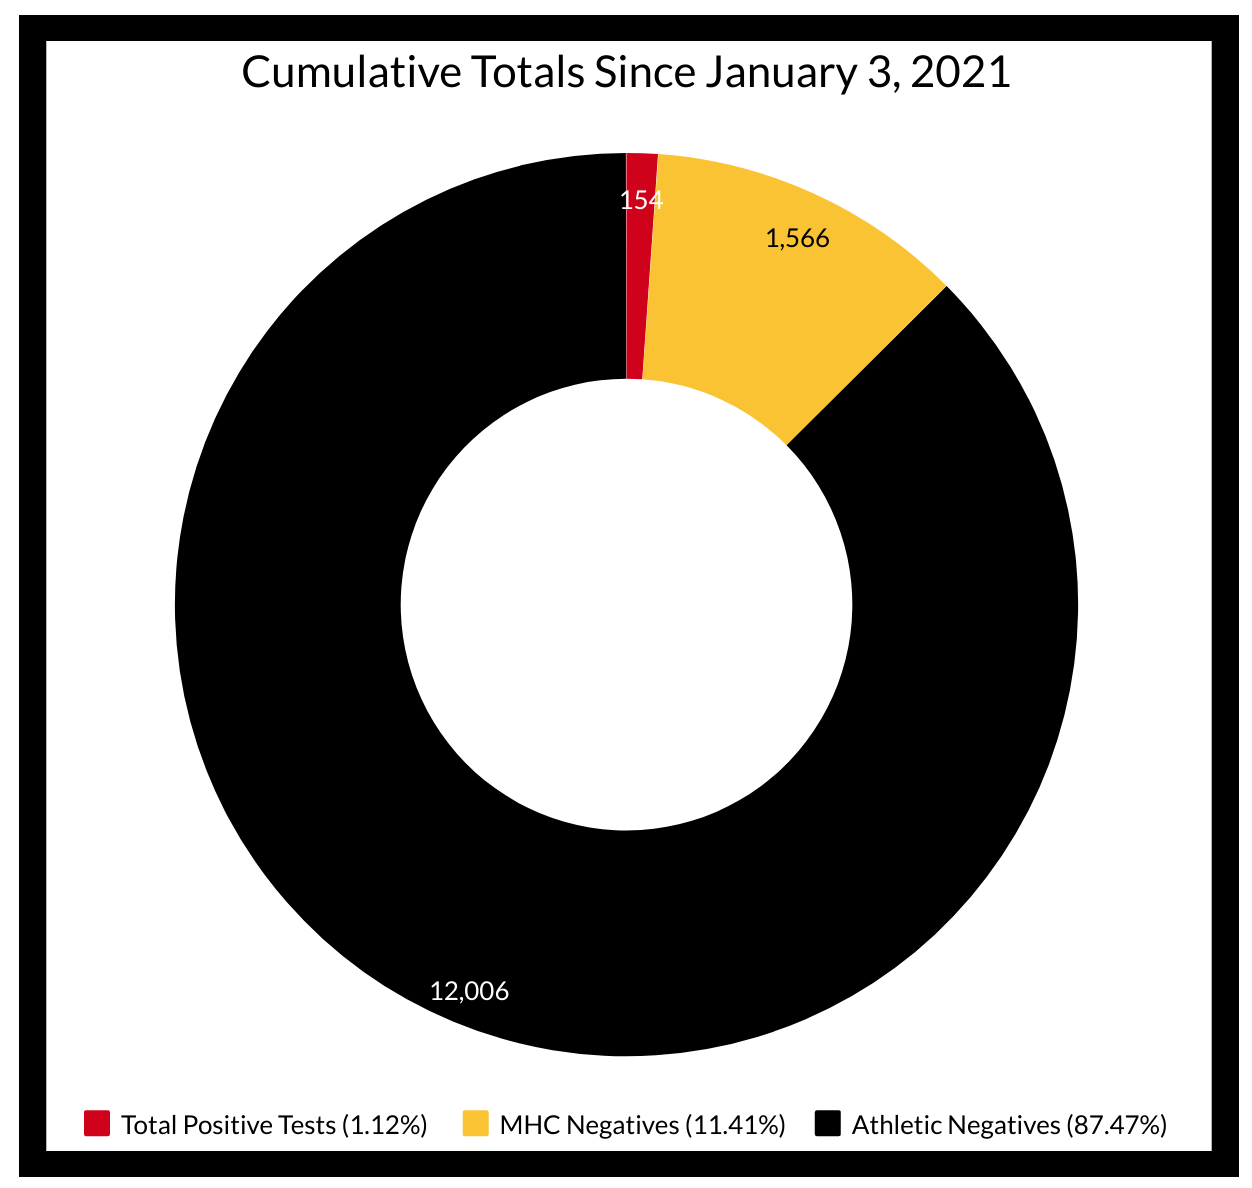 Cumulative Testing Data Since January 3, 2021